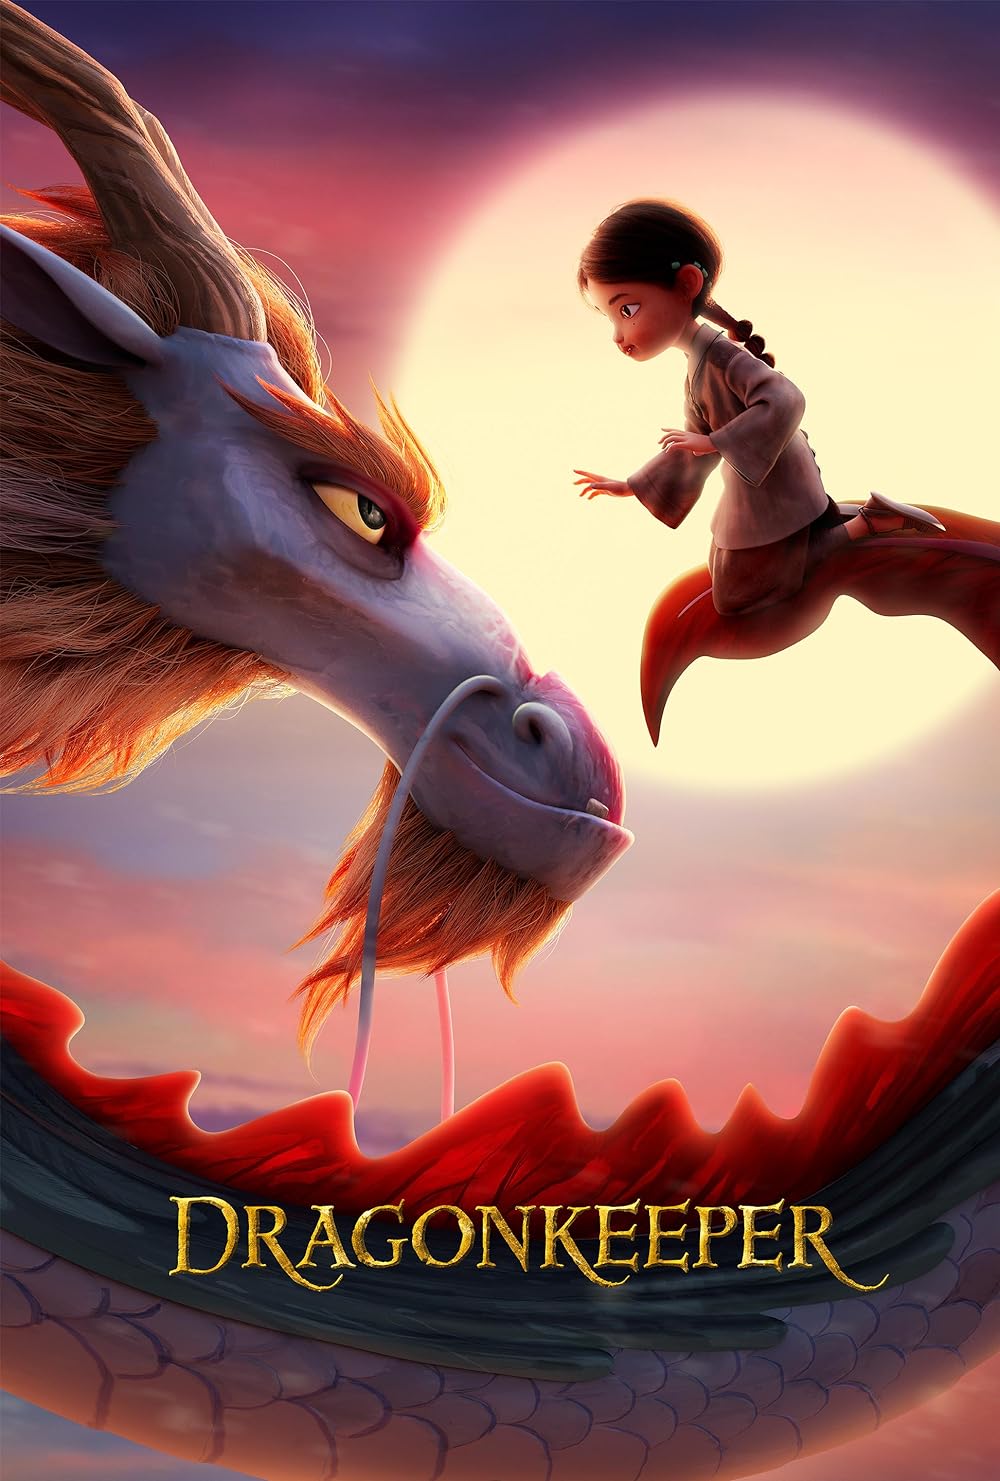 Movie Poster: Dragonkeeper